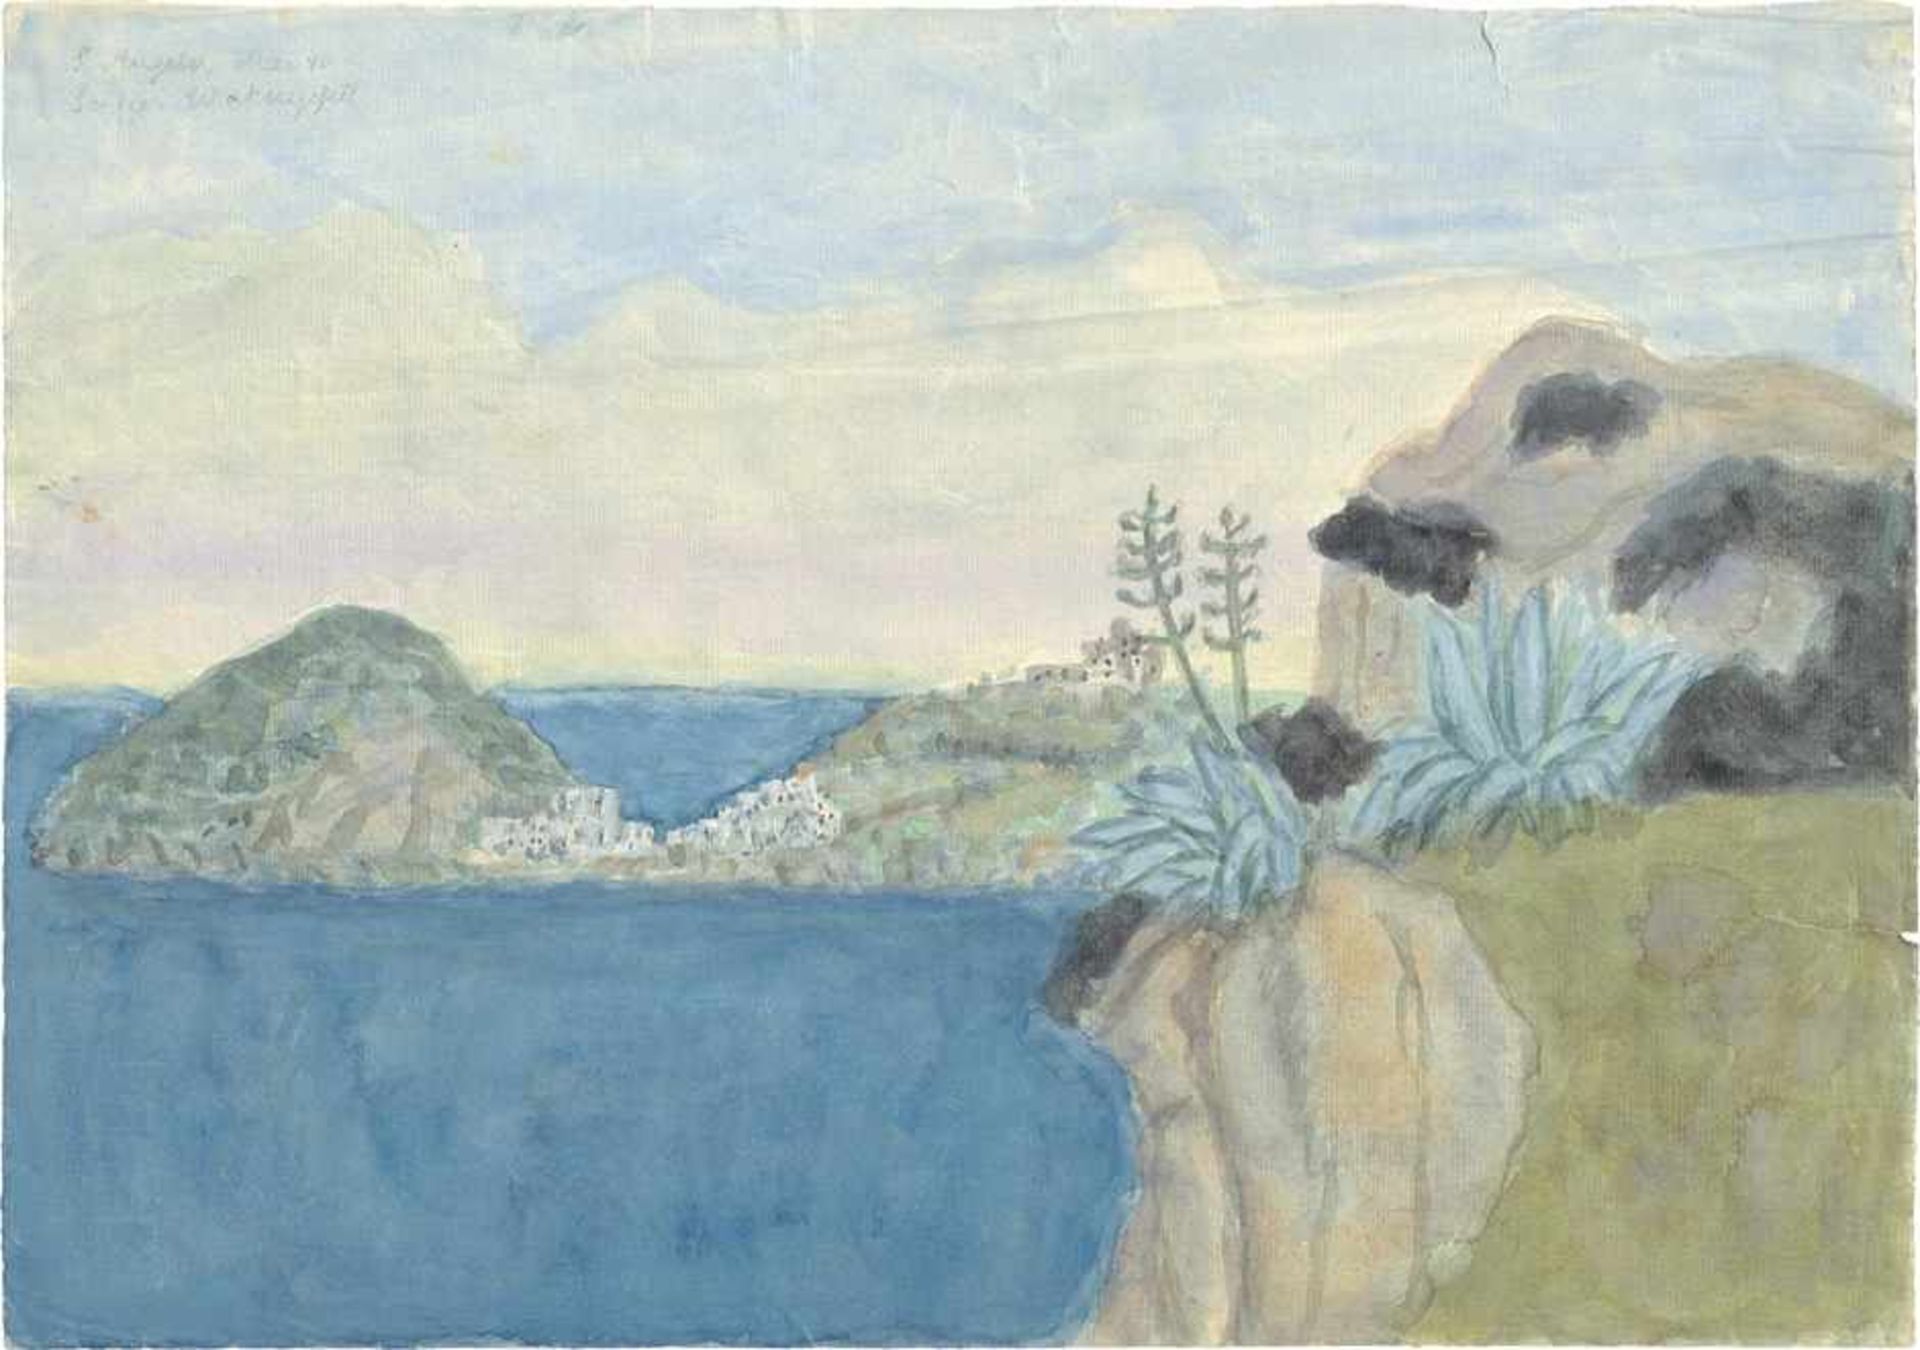 Peiffer-Watenphul, Max: S. Angelo "S. Angelo" Aquarell auf Fabriano-Bütten. 1940. 33,6 x 48,4 cm.